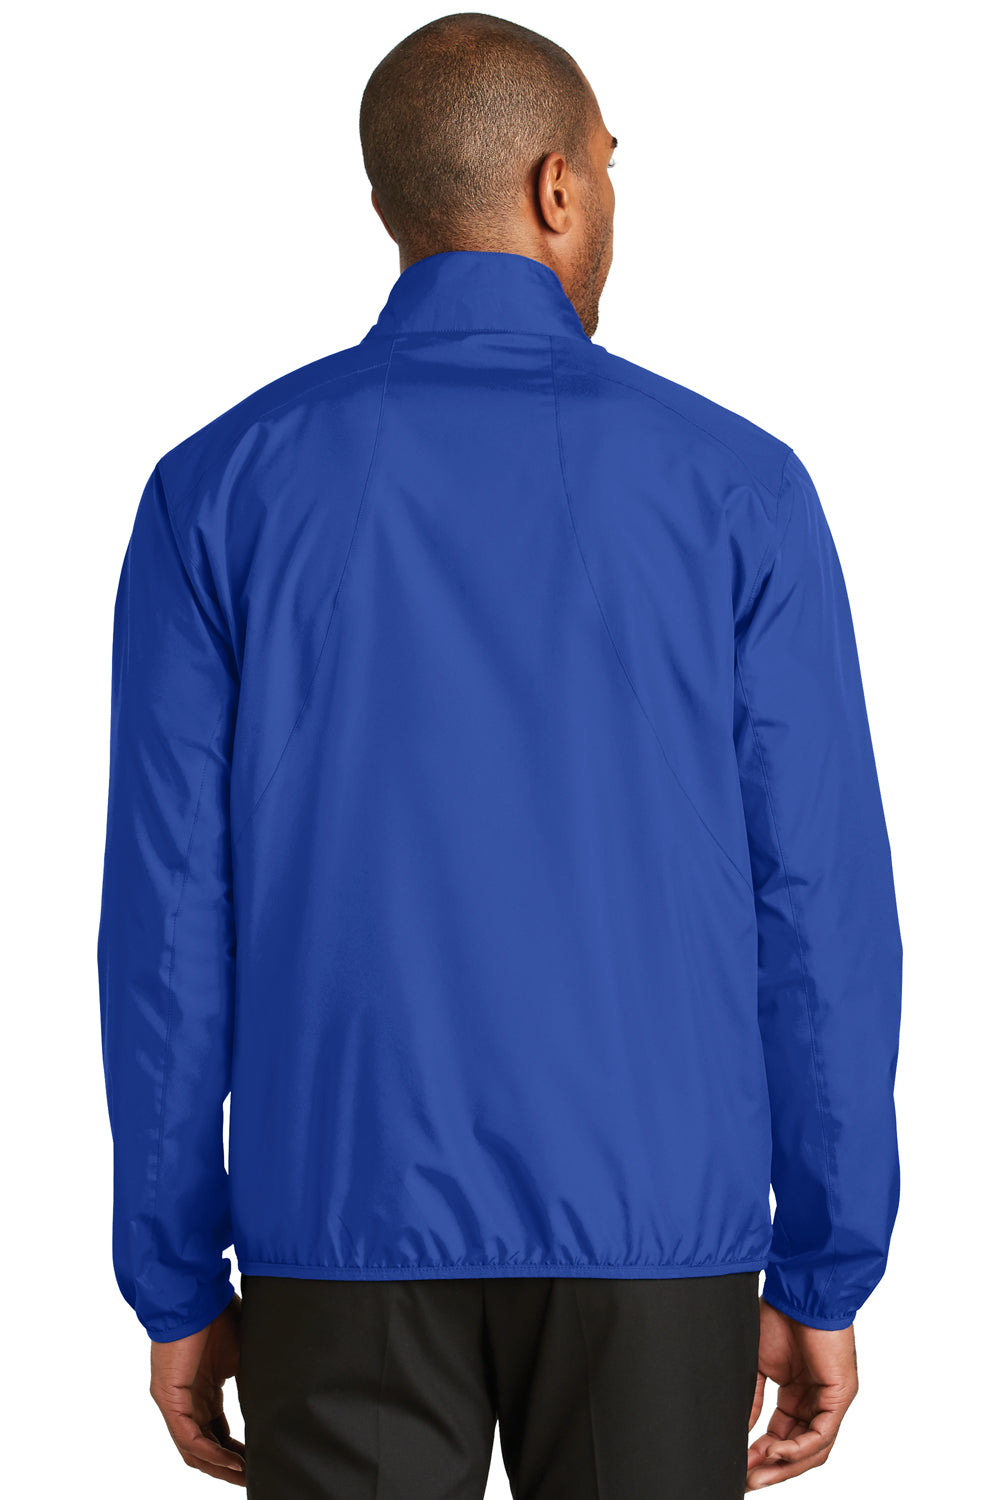 Port Authority J344 Mens Zephyr Wind & Water Resistant Full Zip Jacket Royal Blue Back